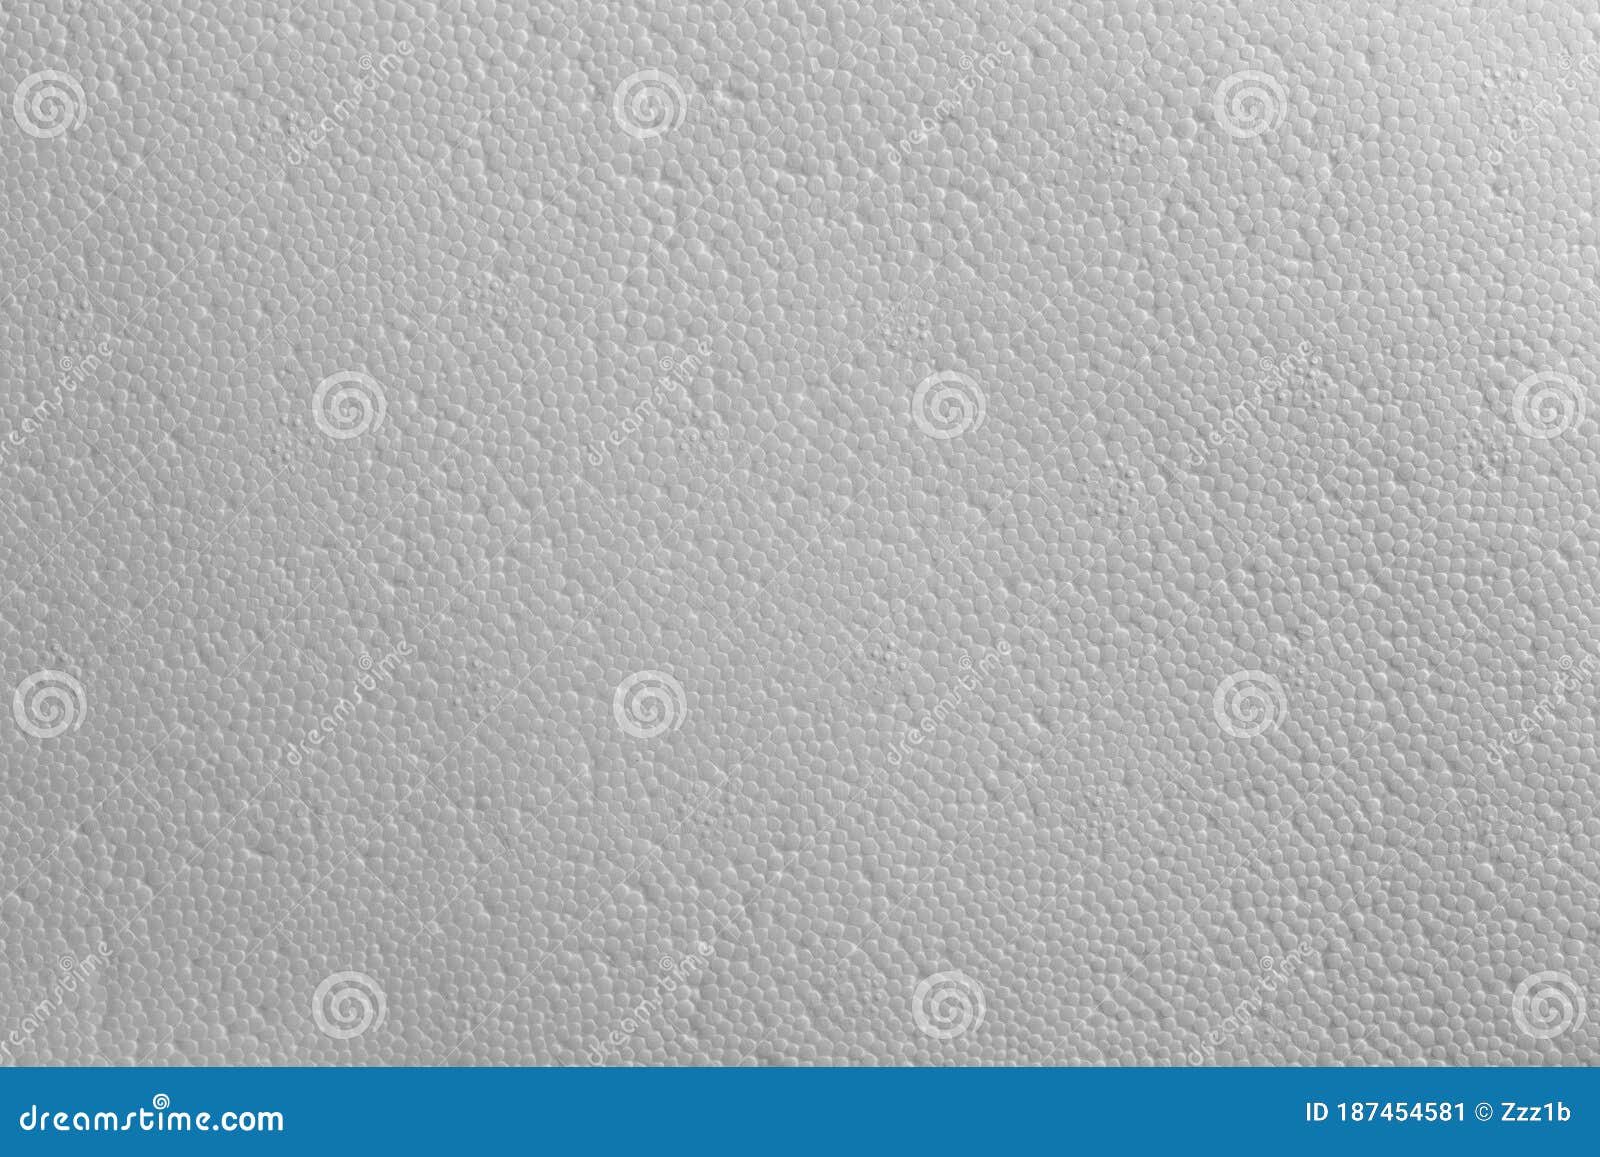 seamless texture of white polystyrene foam or styrofoam, close-up flat white on white background